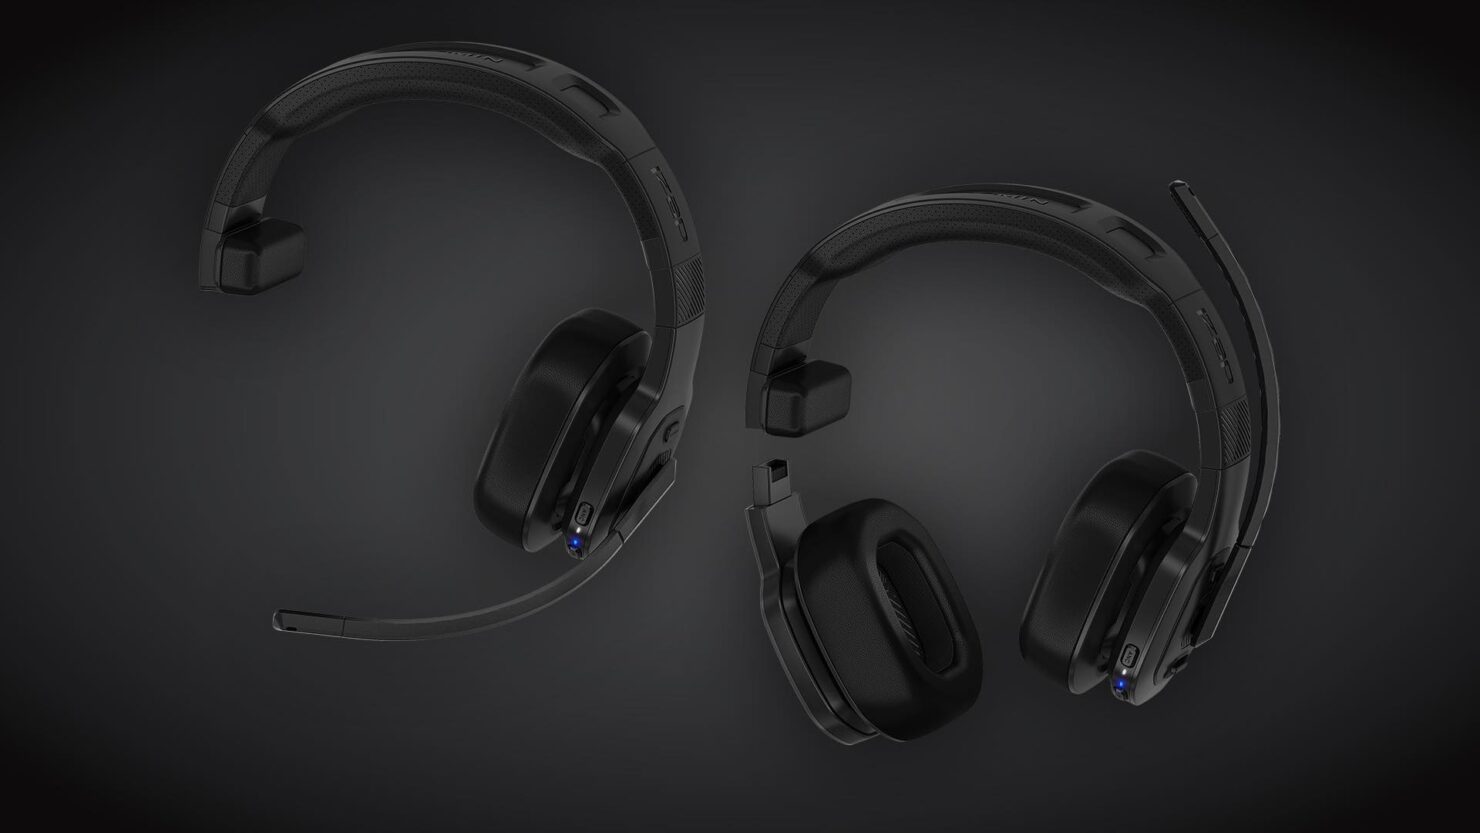 Garmin announces new dezl headsets built for truck drivers